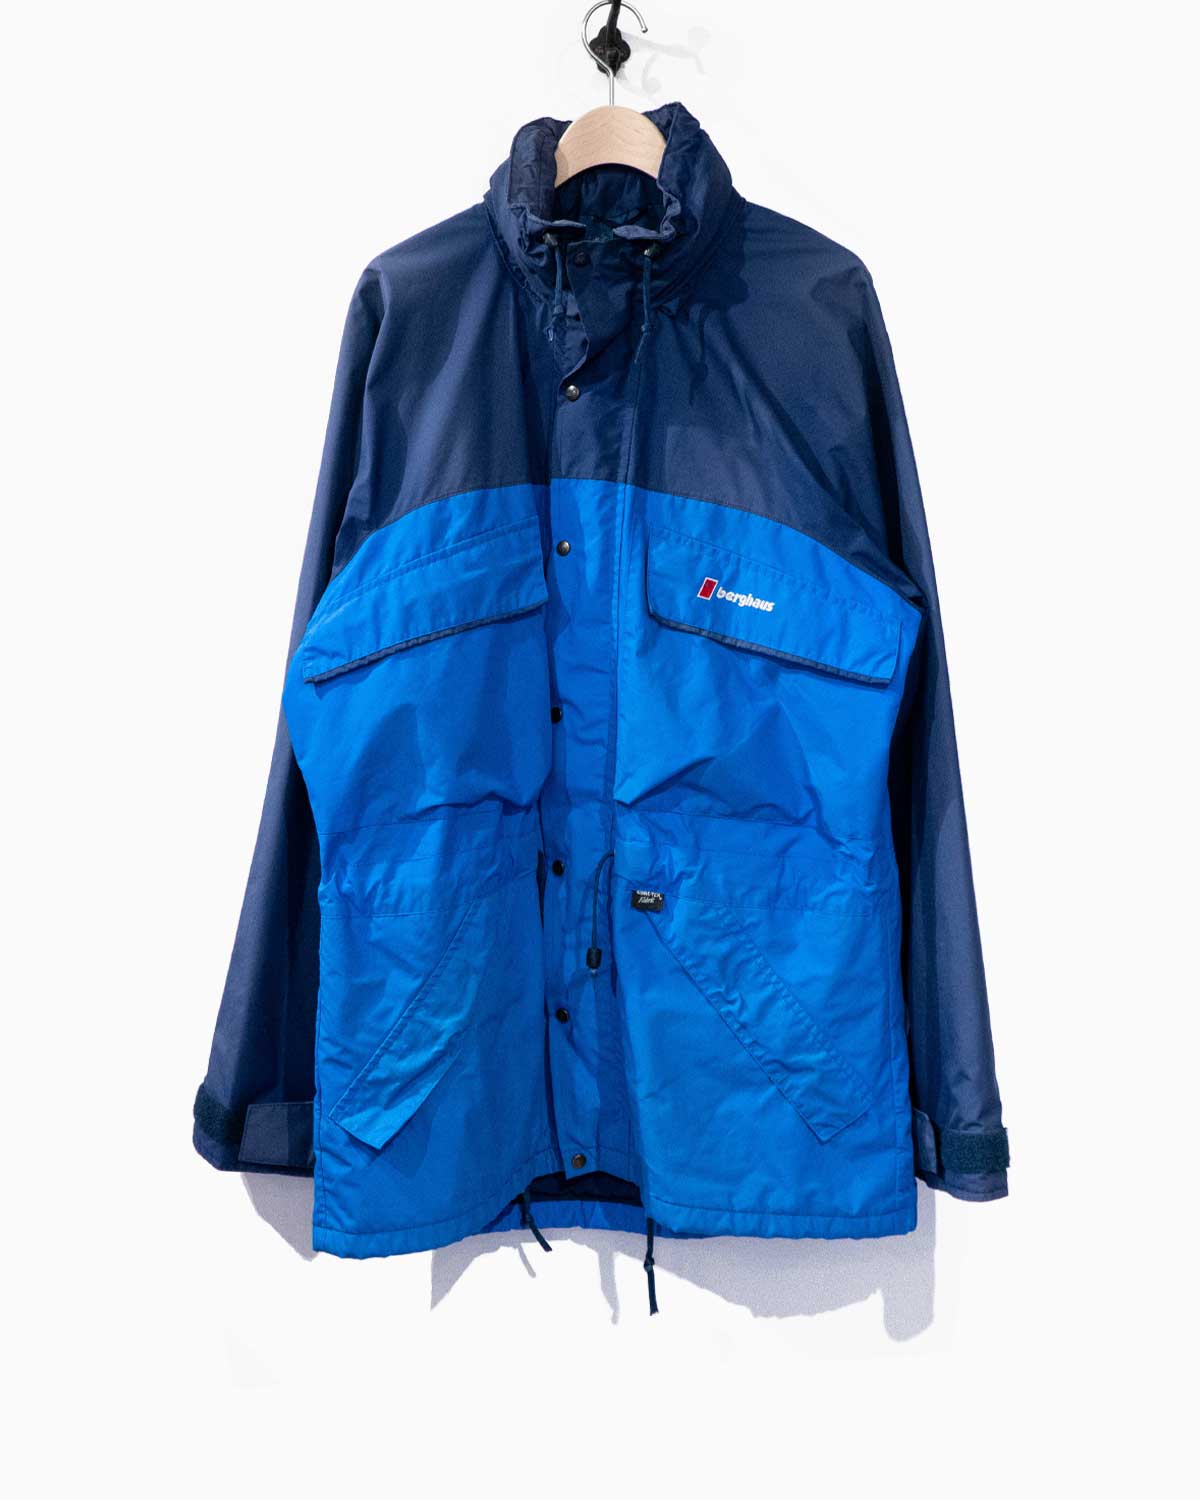 vintage berghaus goretex jacket -navy × blue-